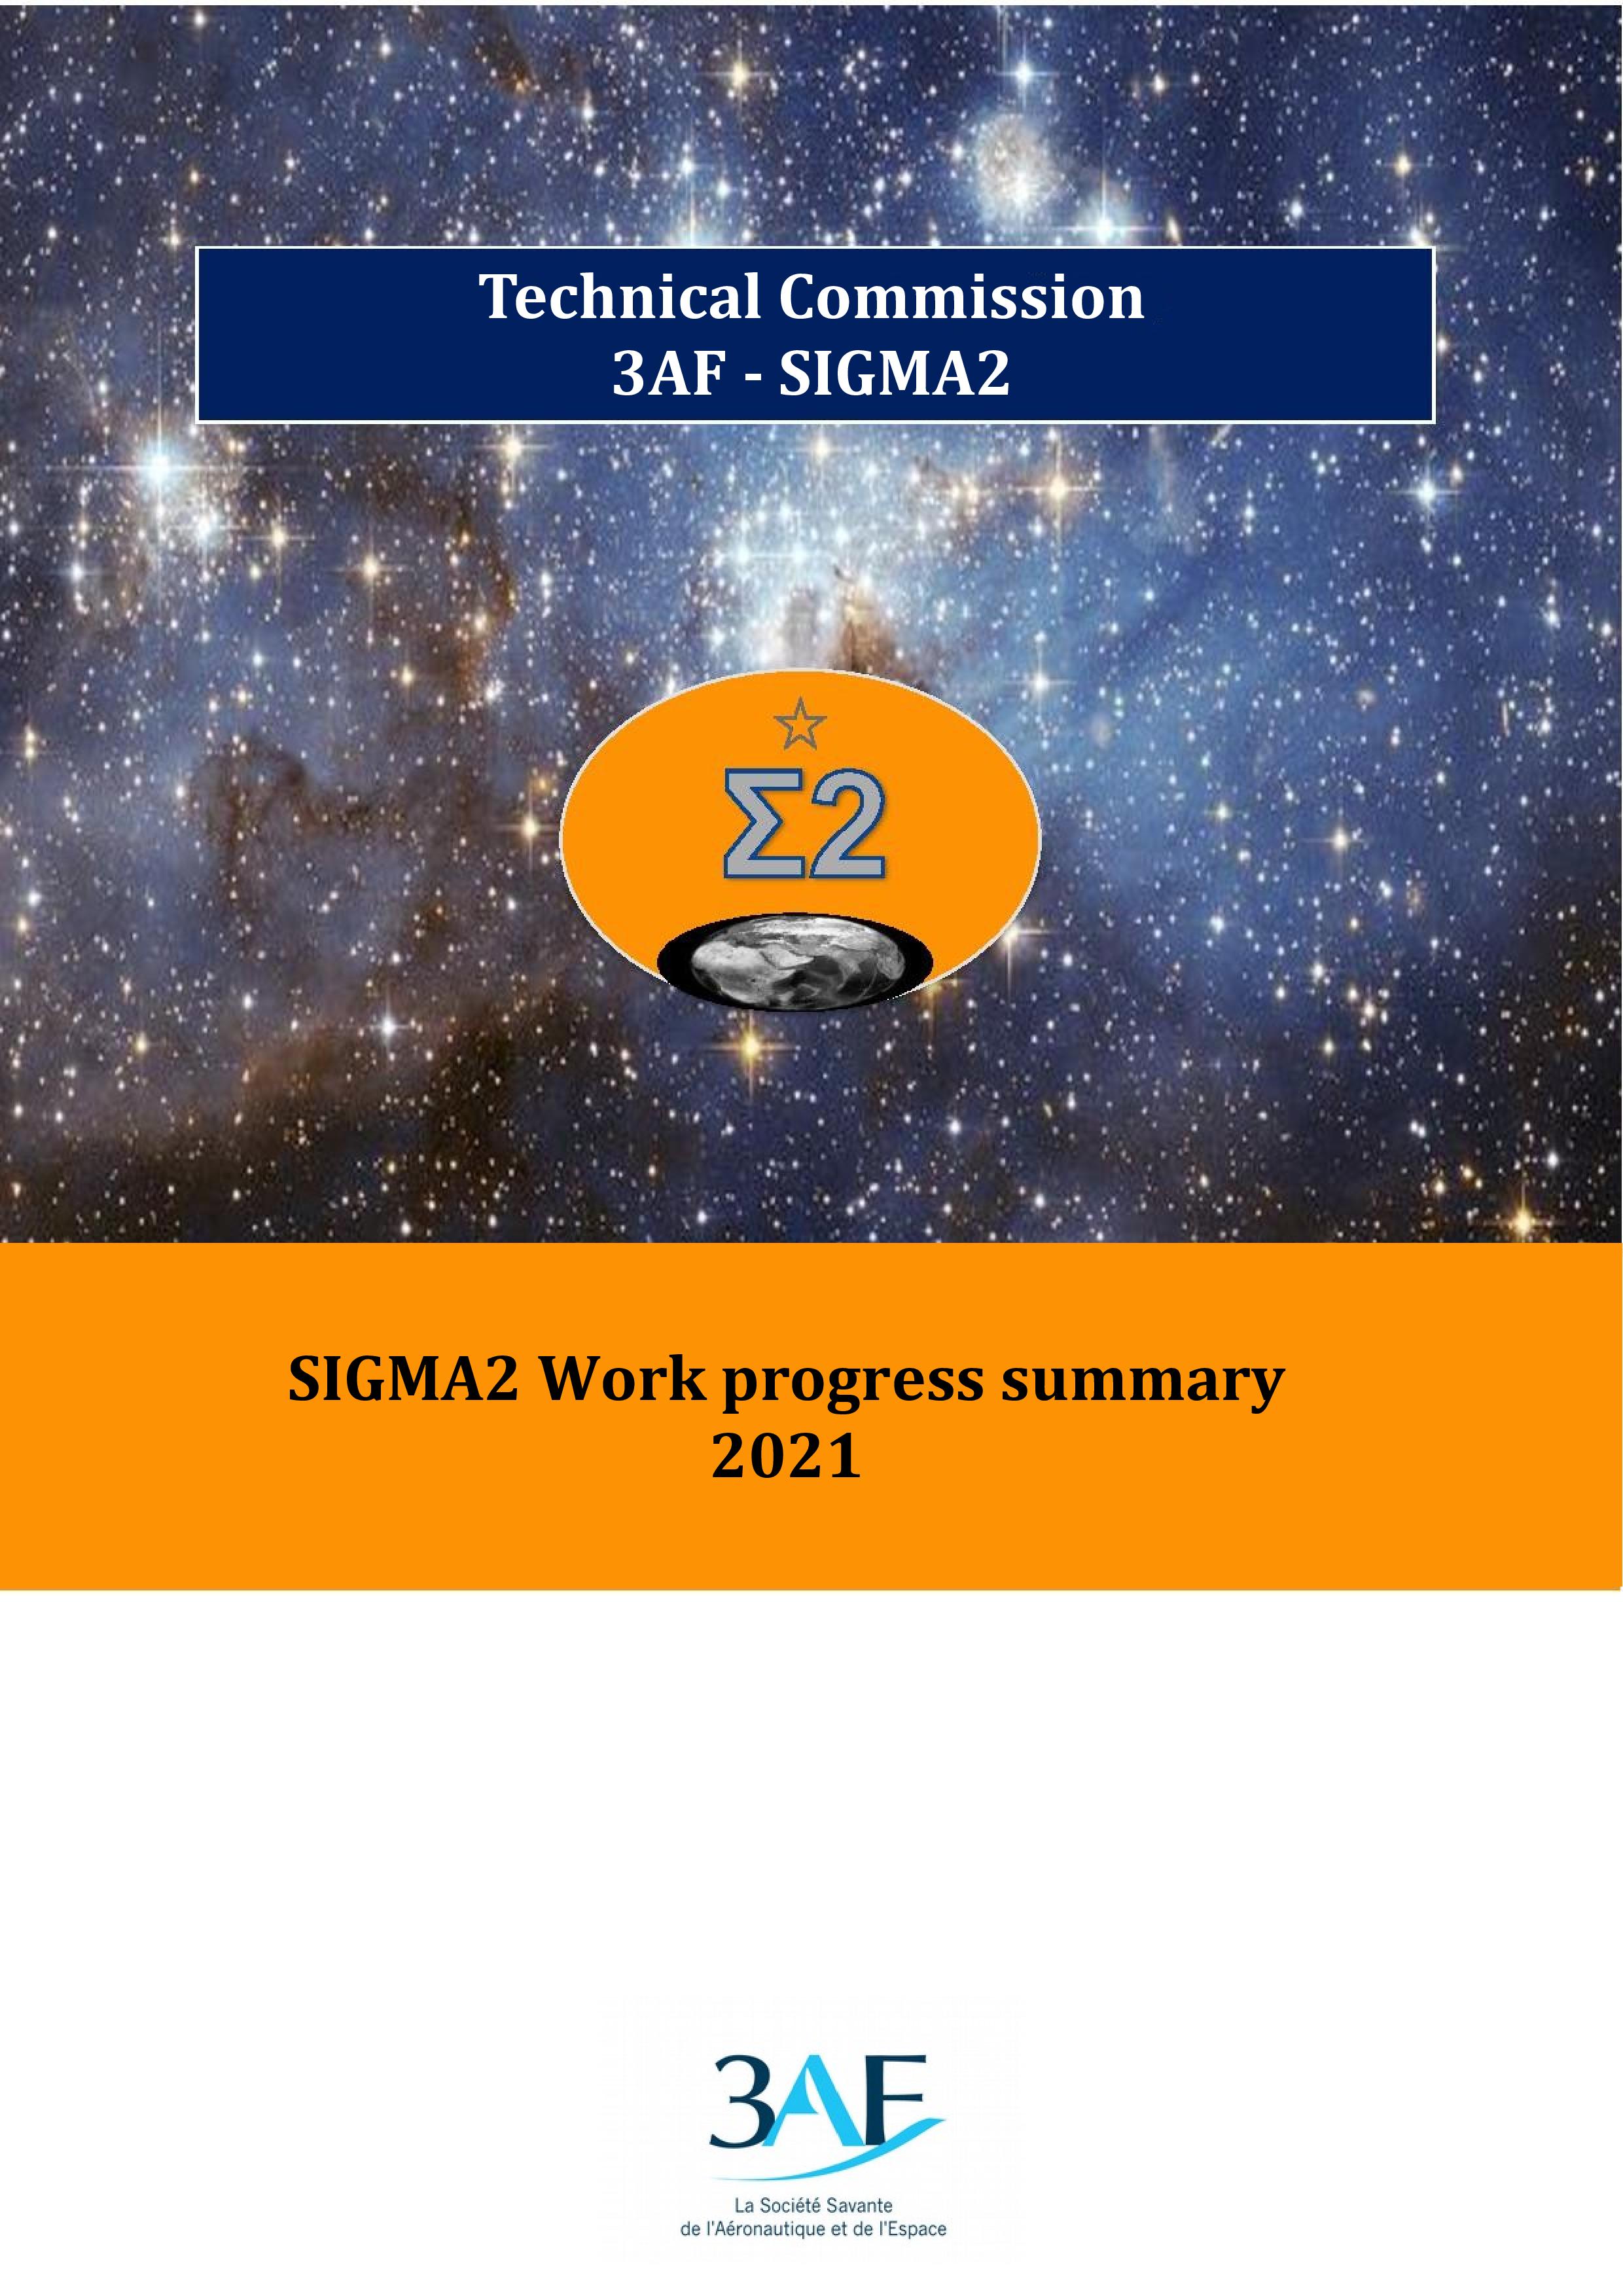 SIGMA2 Work progress summary 2021